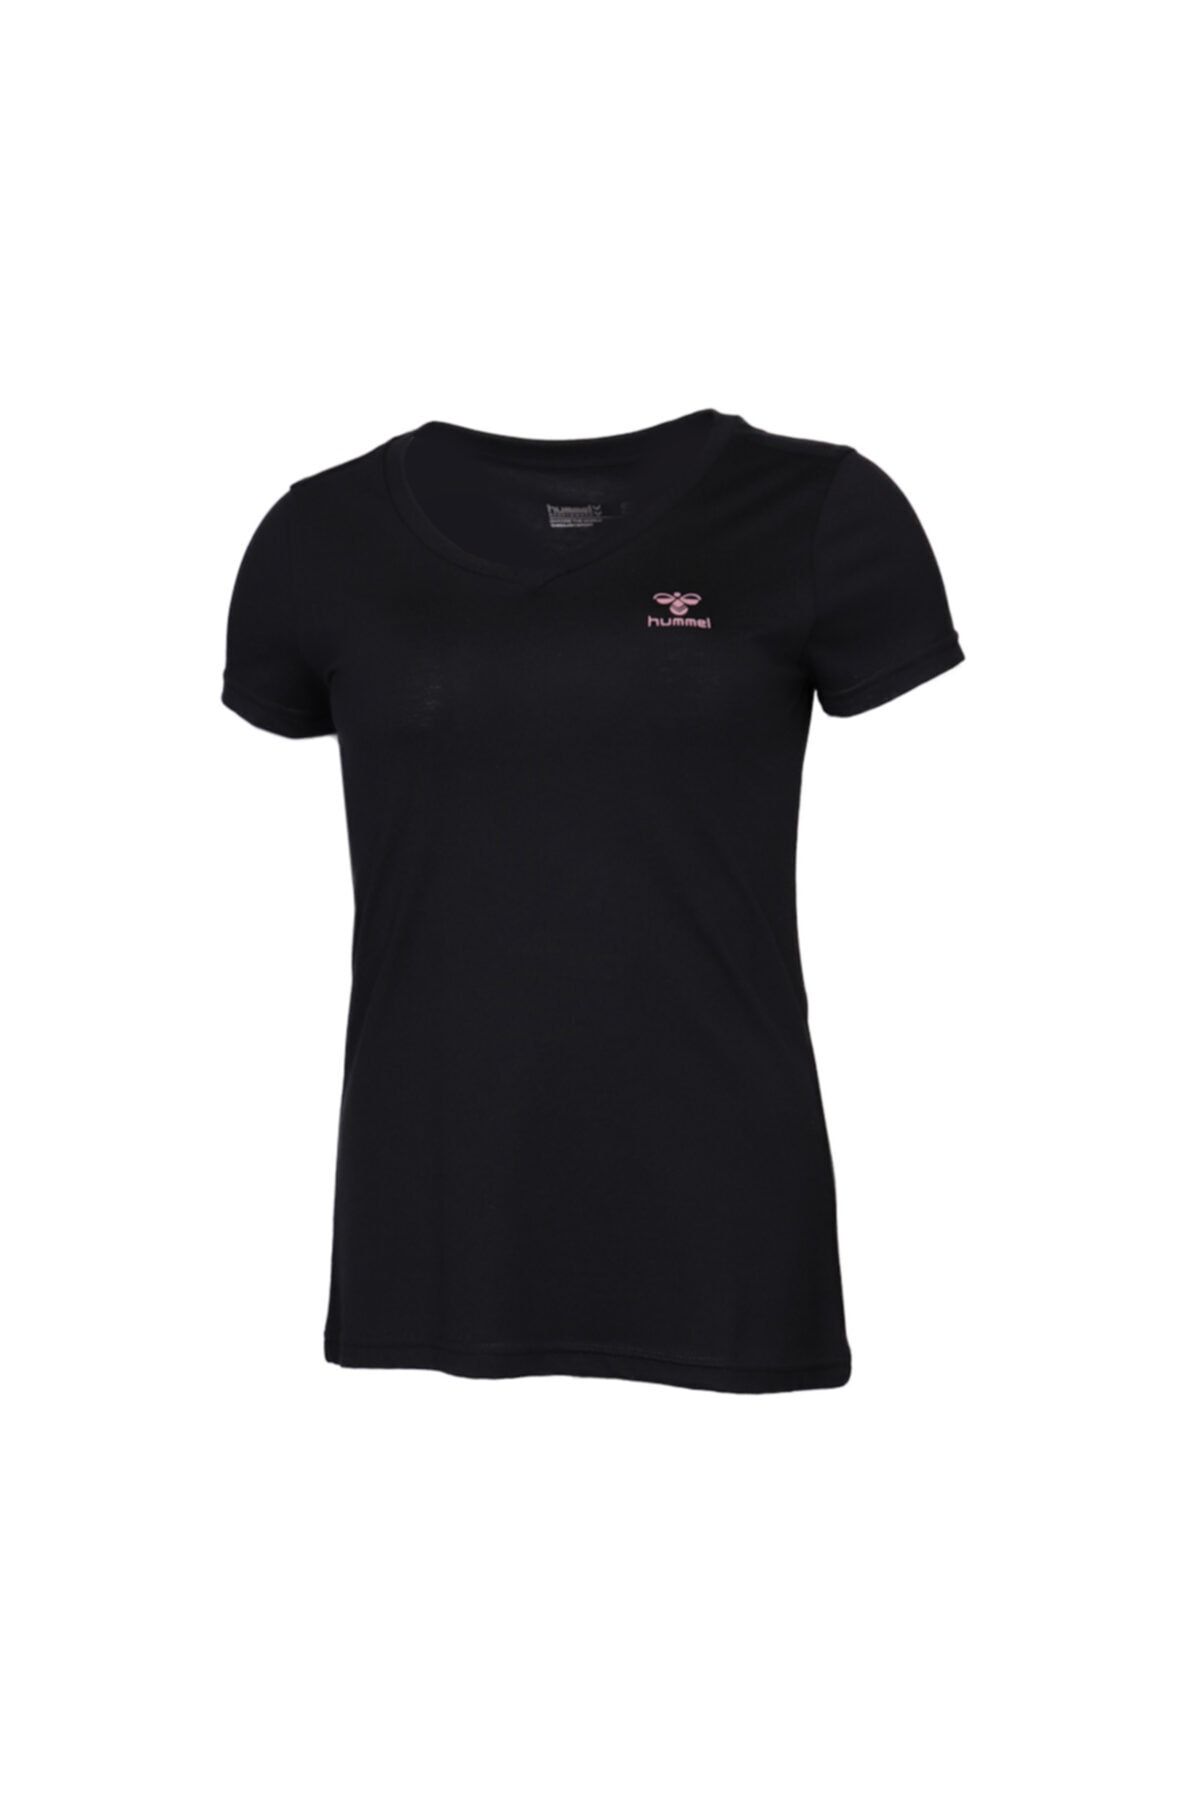 hummel Vlora Siyah Kısa Kollu Kadın T-Shirt